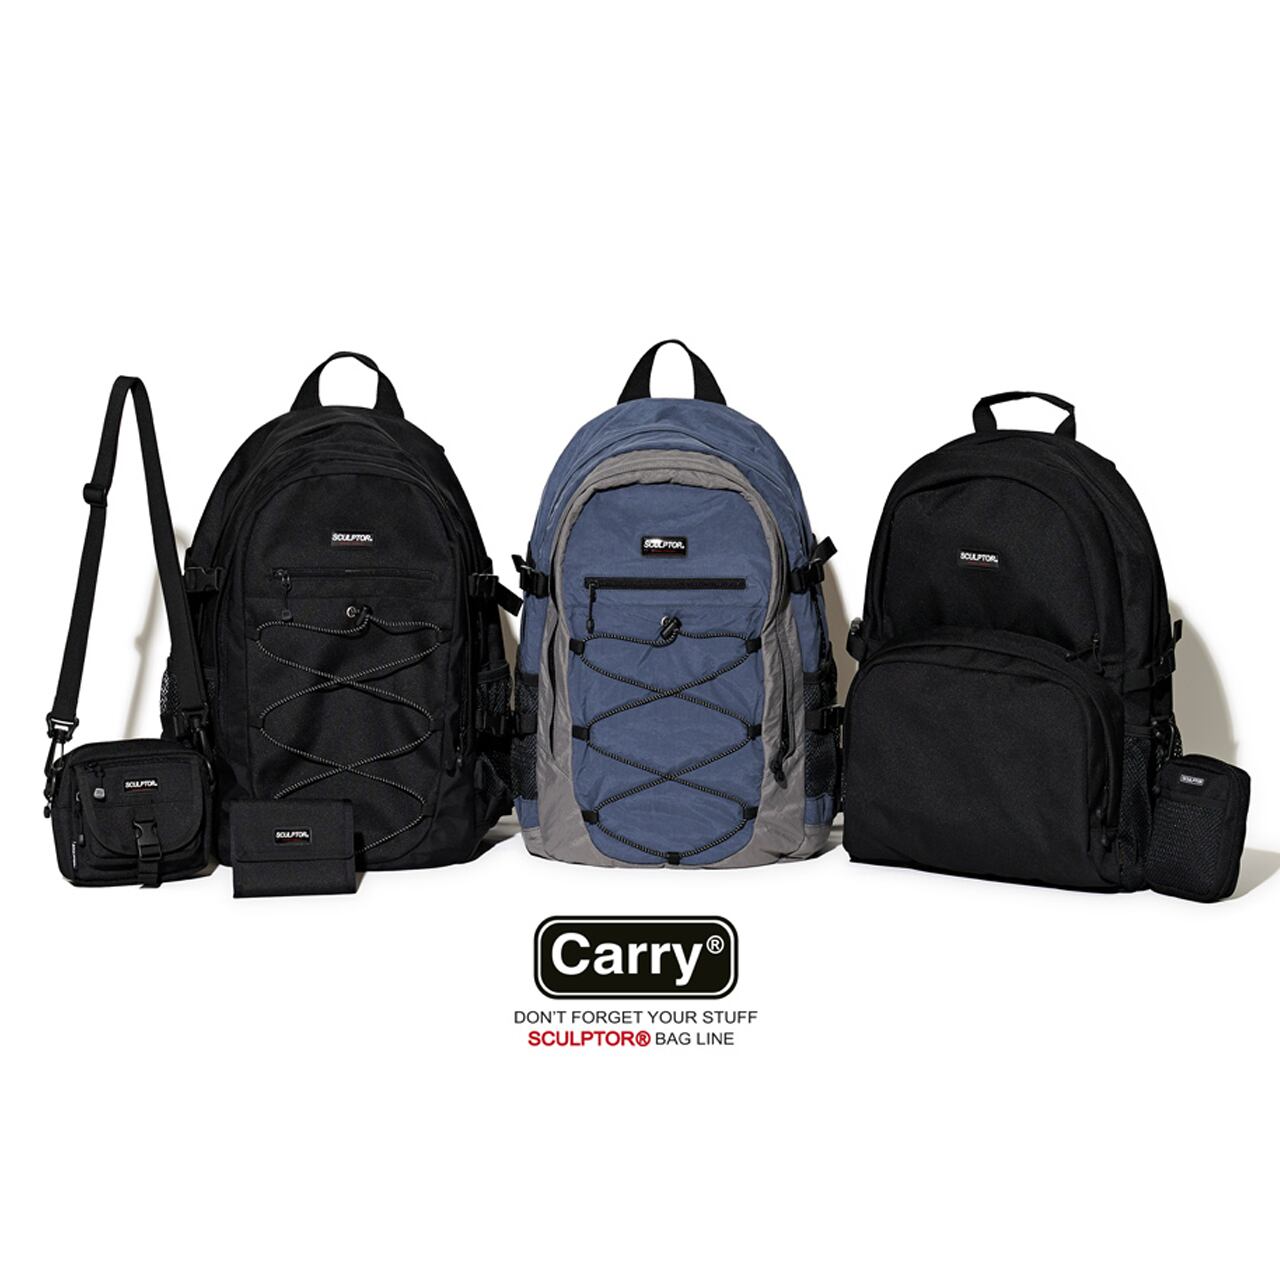 [SCULPTOR] Cordura Daypack [BLACK] 正規品 韓国 ブランド バックパック リュック カバン | BONZ  (韓国ブランド 代行) powered by BASE